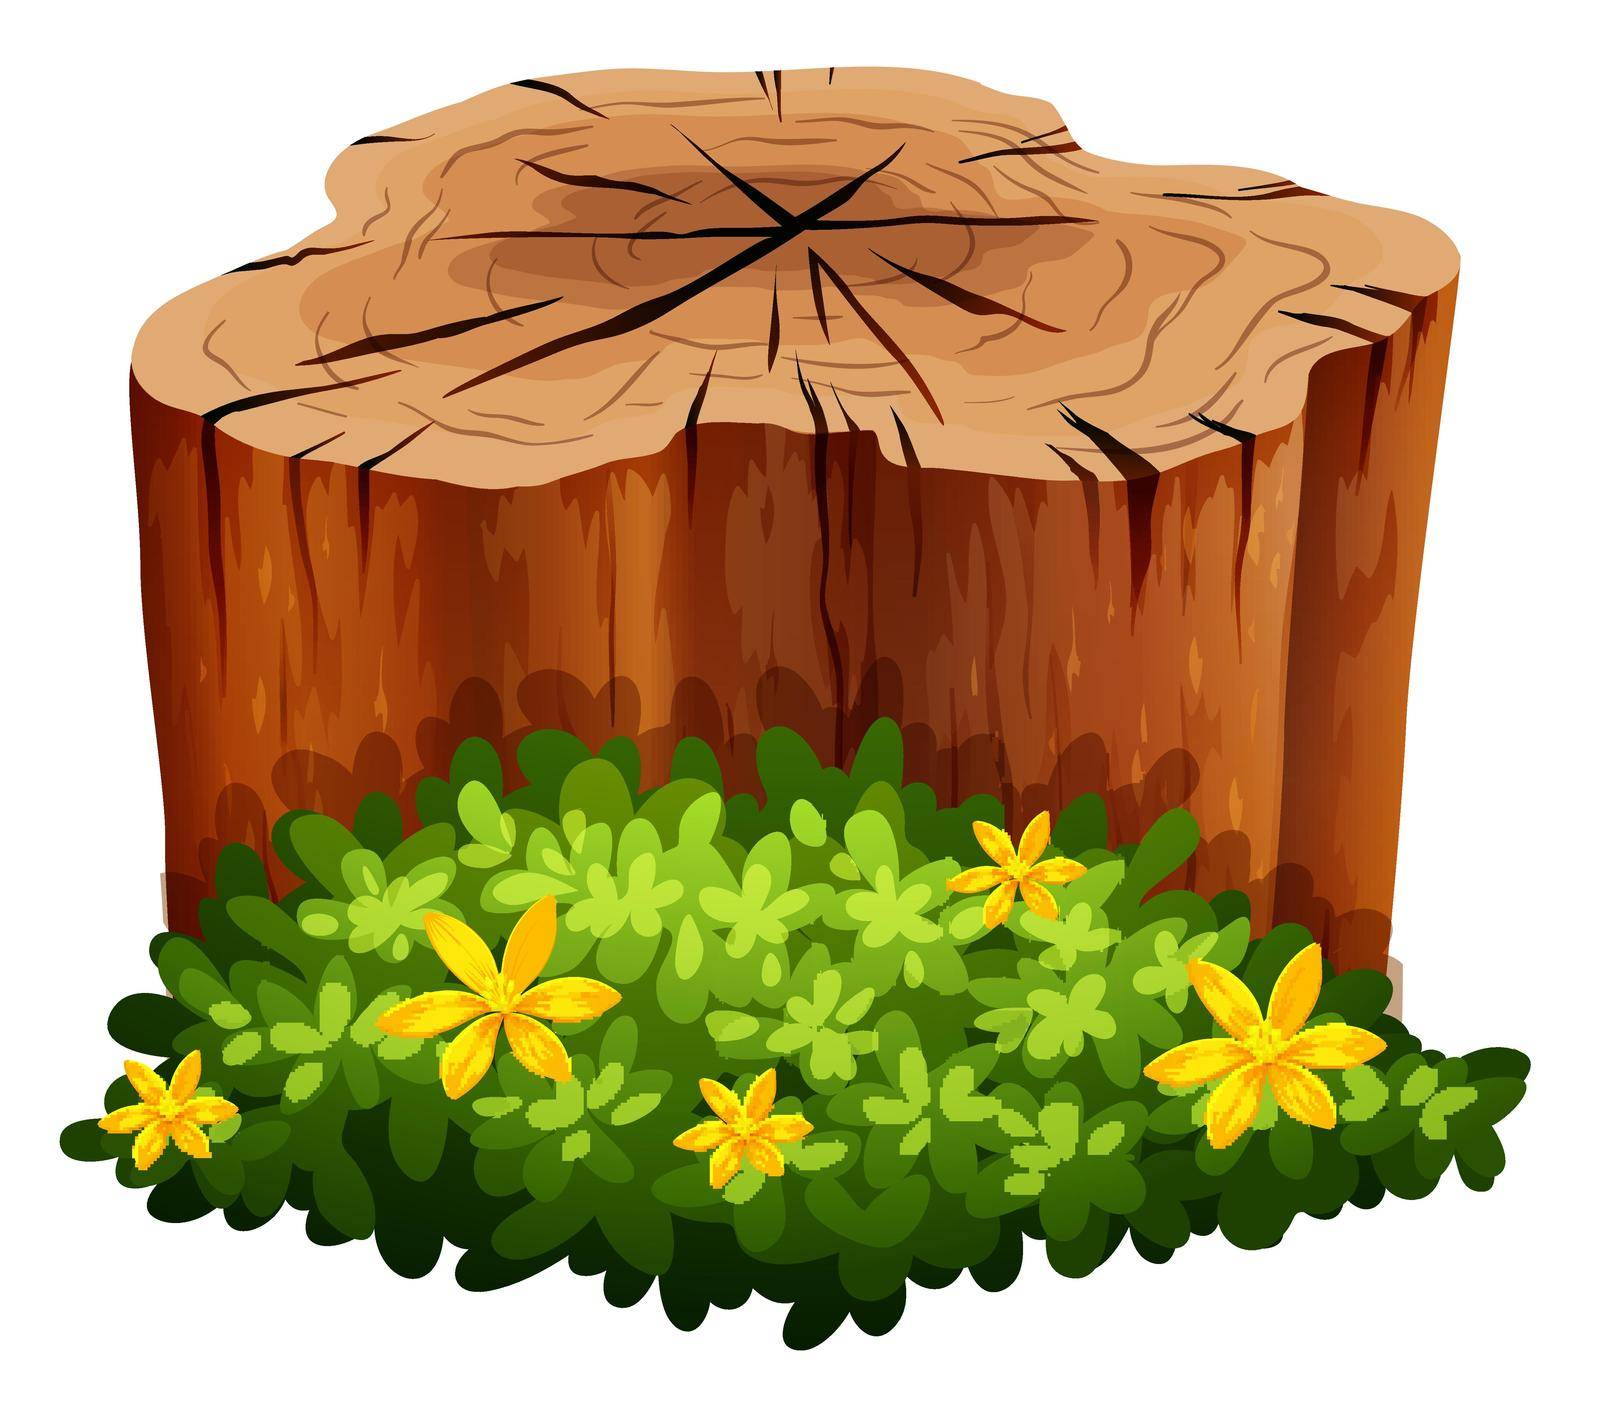 Log and green bush illustration